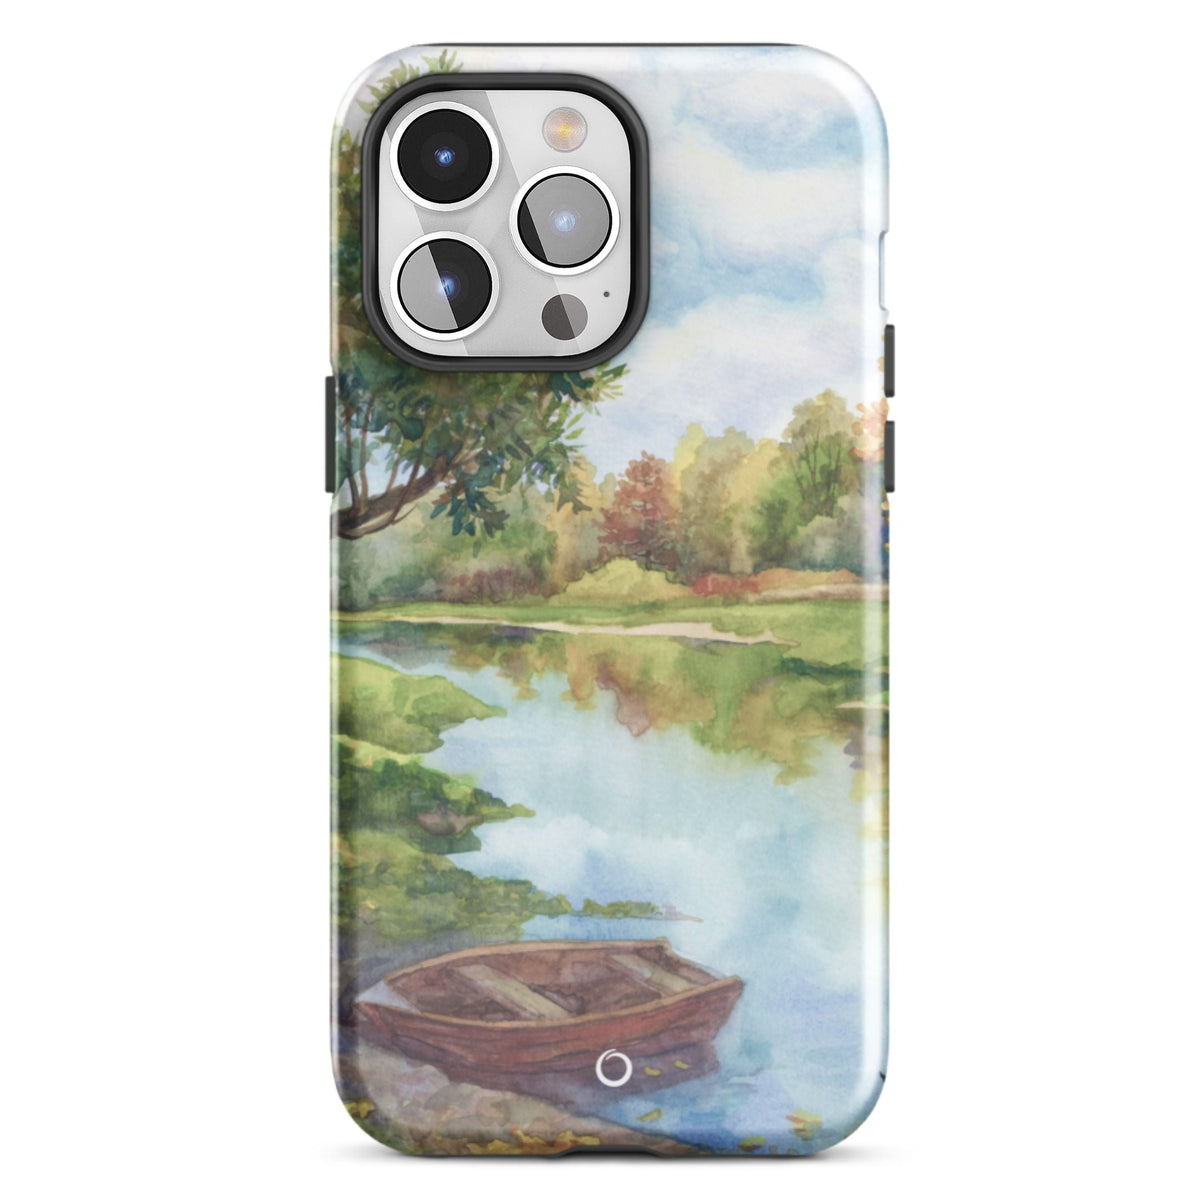 Lakeside Escape iPhone Case - iPhone 11 Pro Max